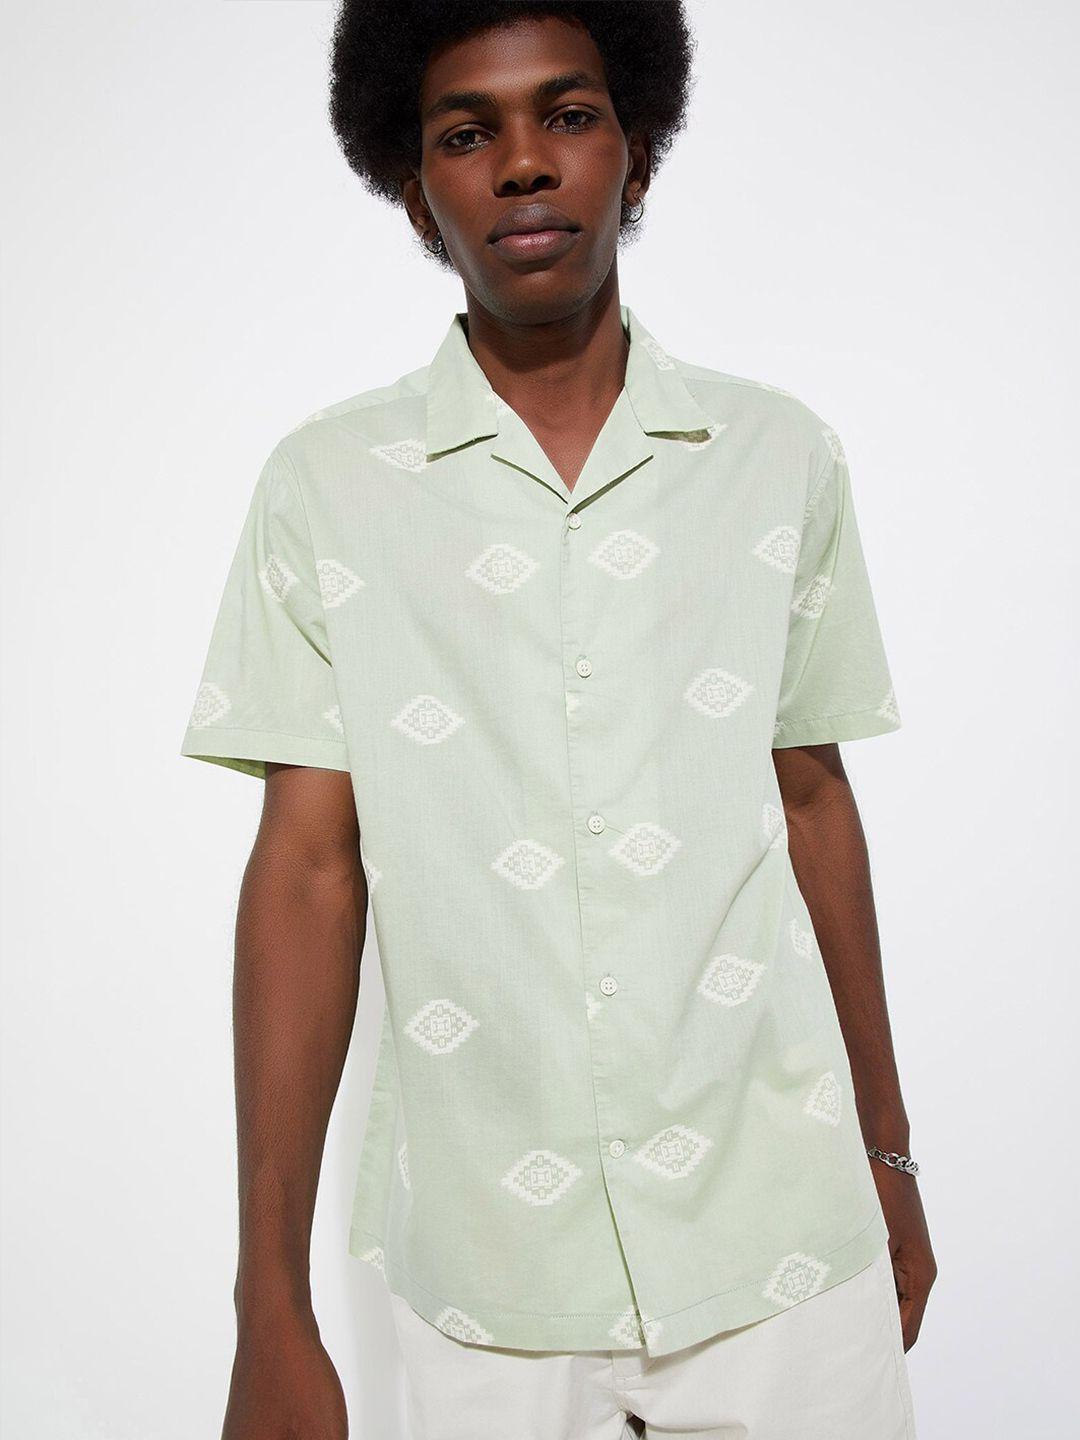 max-standard-opaque-cuban-collar-pure-cotton-casual-shirt